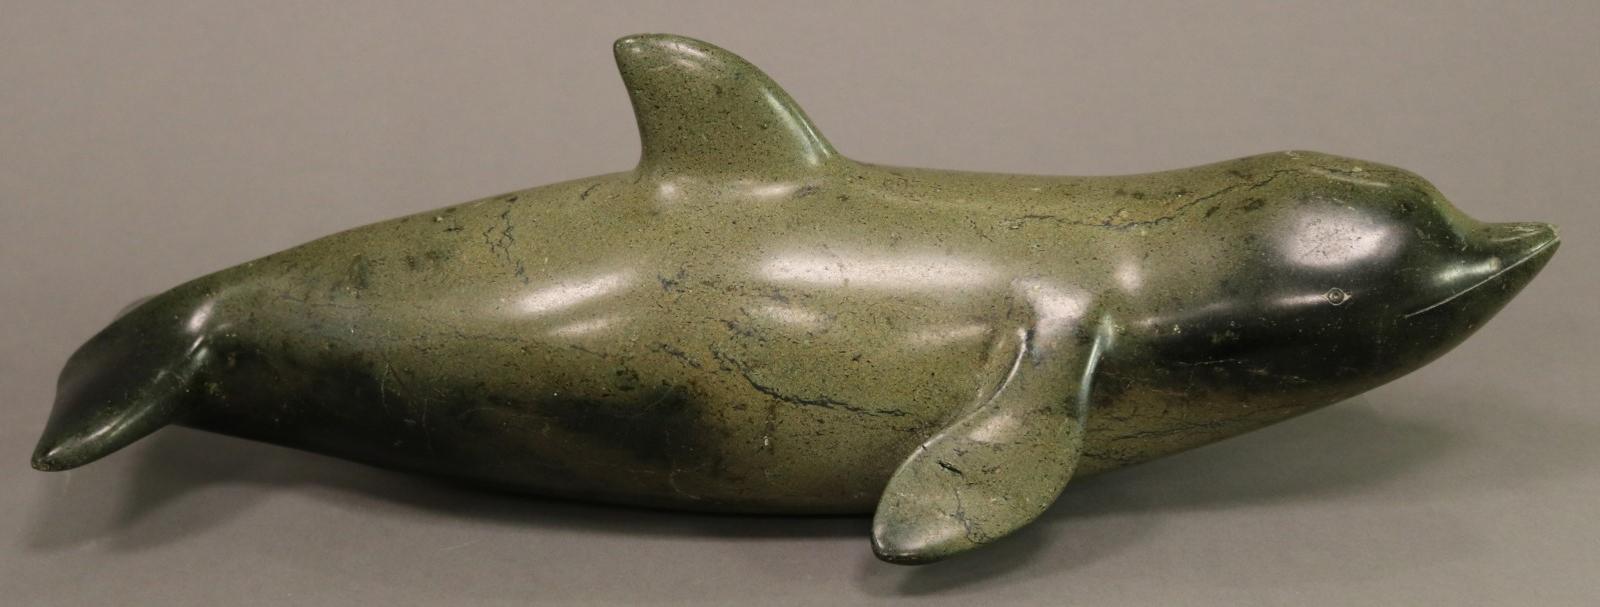 Josephie Eeyevadluk (1938) - Beluga Whale; 1973